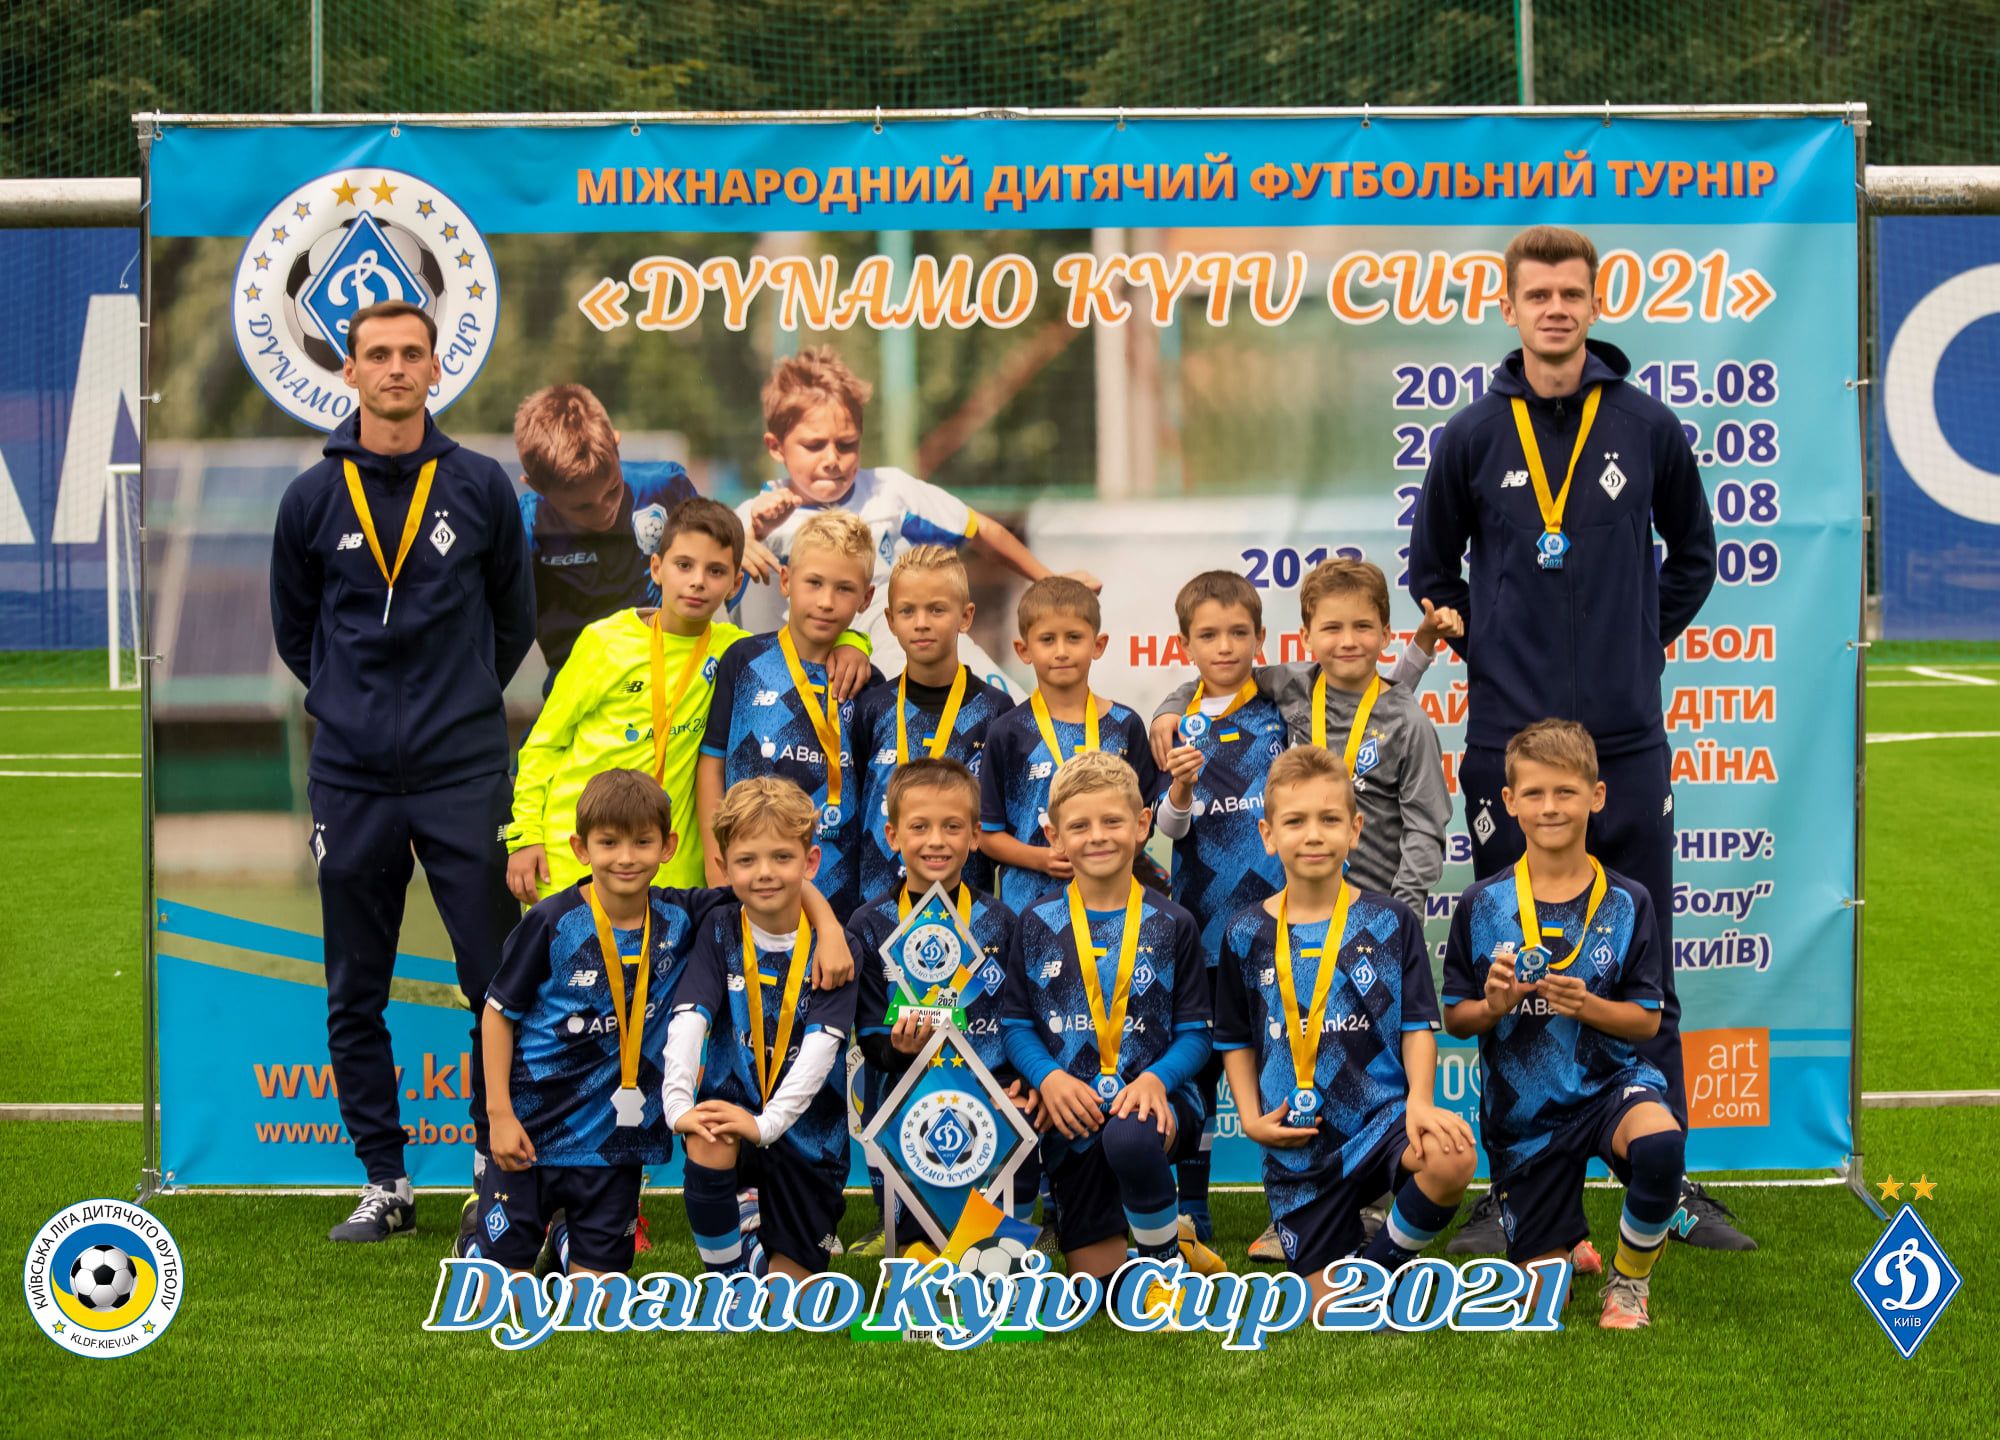 «Динамо» U9 стало победителем «Dynamo Kyiv Cup 2021», а «Динамо» U8 заняло второе место